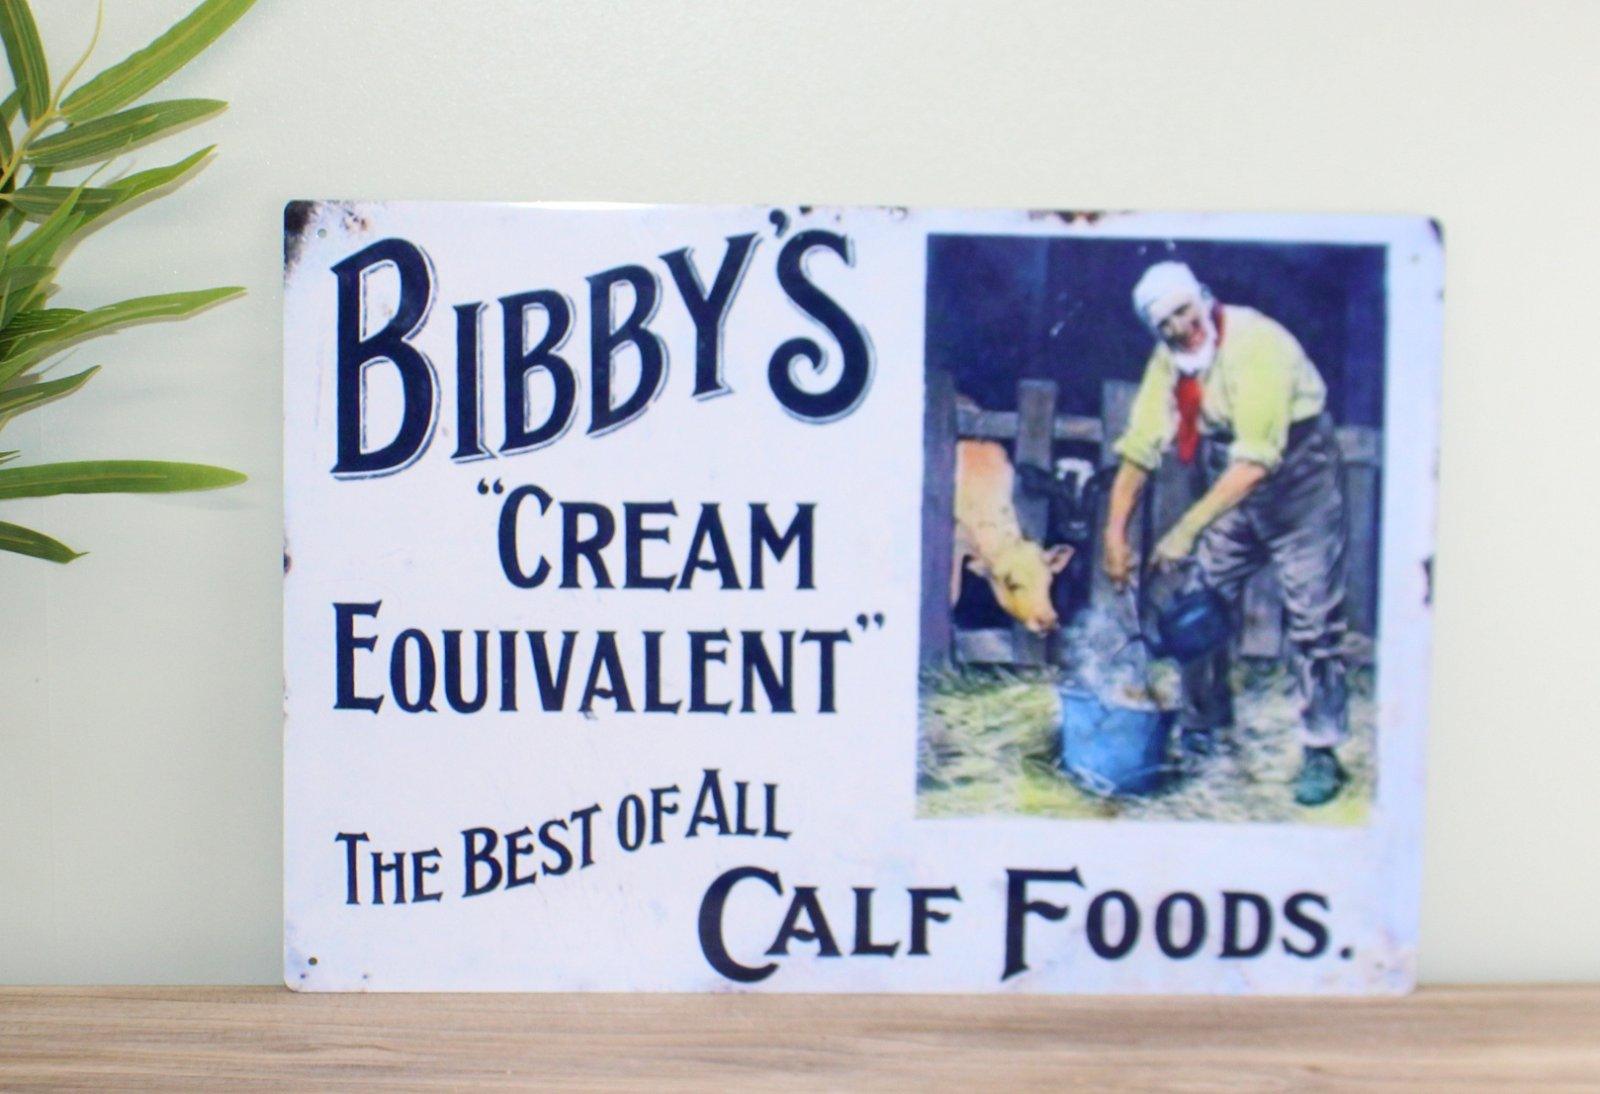 View Vintage Metal Sign Retro Advertising Bibbys Calf Foods information